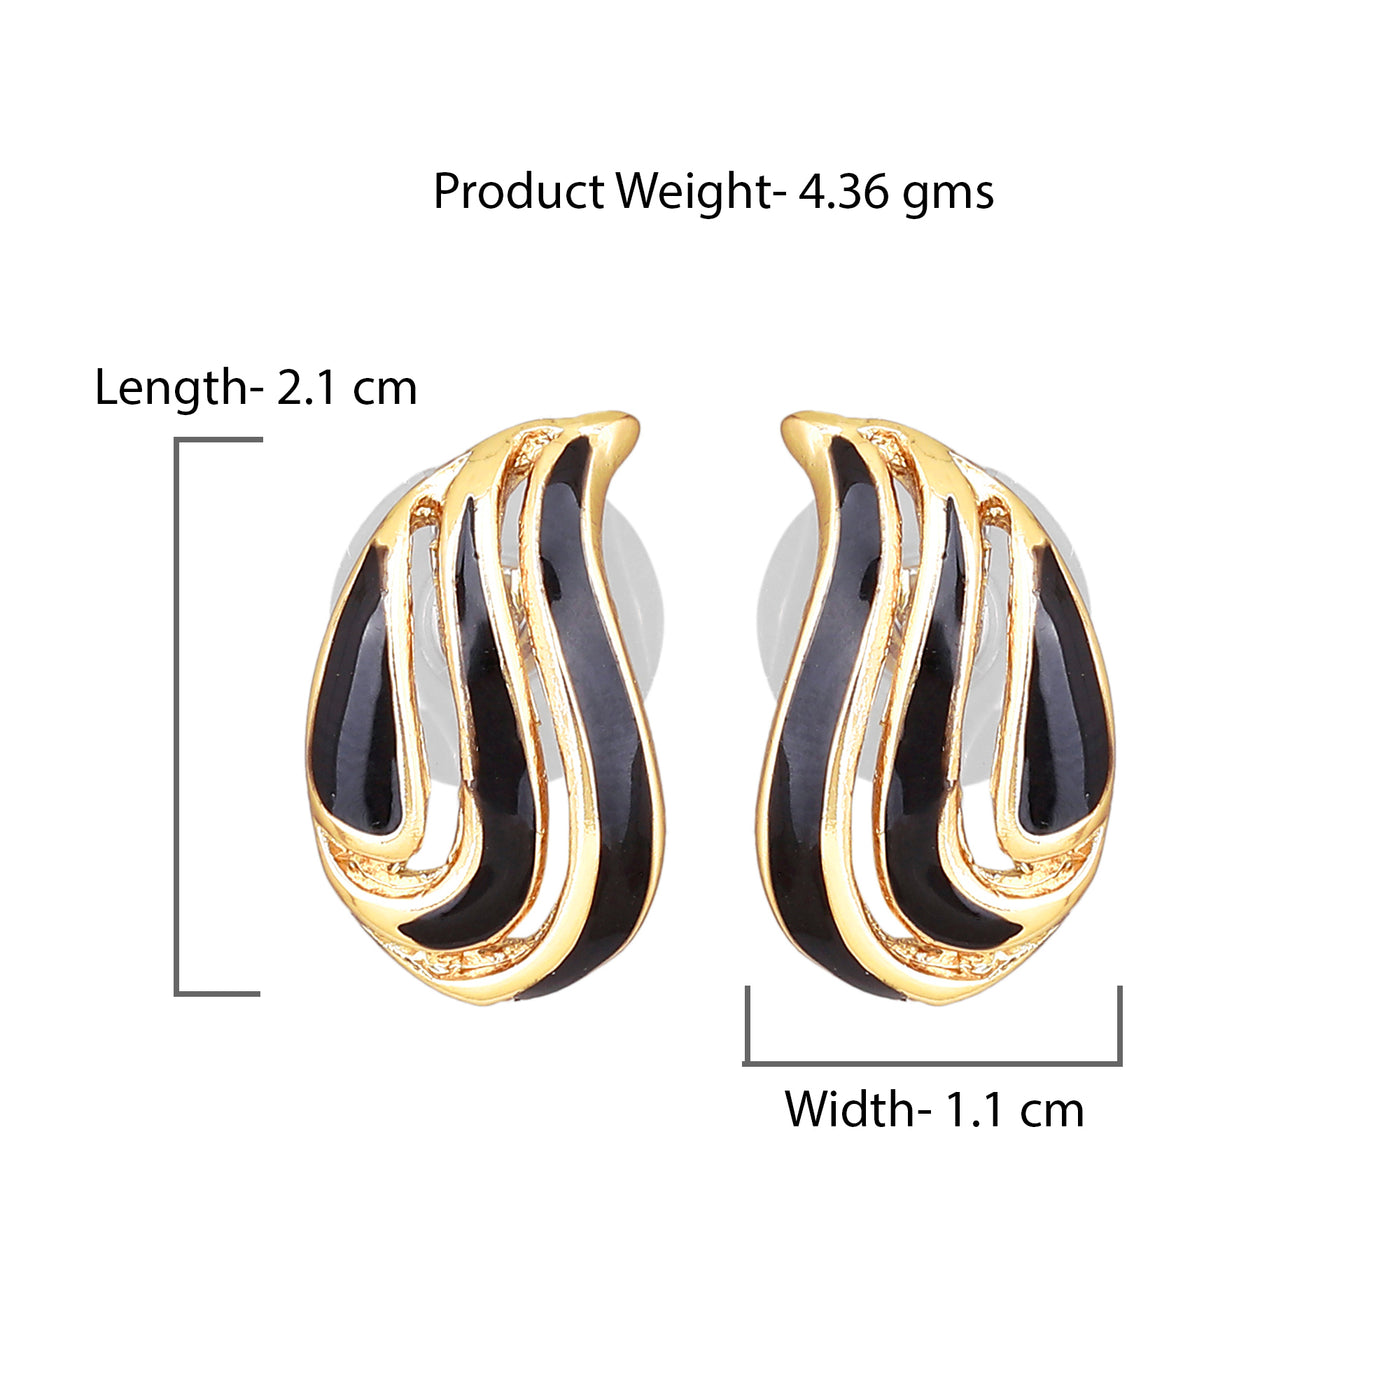 Estele Gold Plated Leaf Shaped Stud Earring with Black Enamel for Women